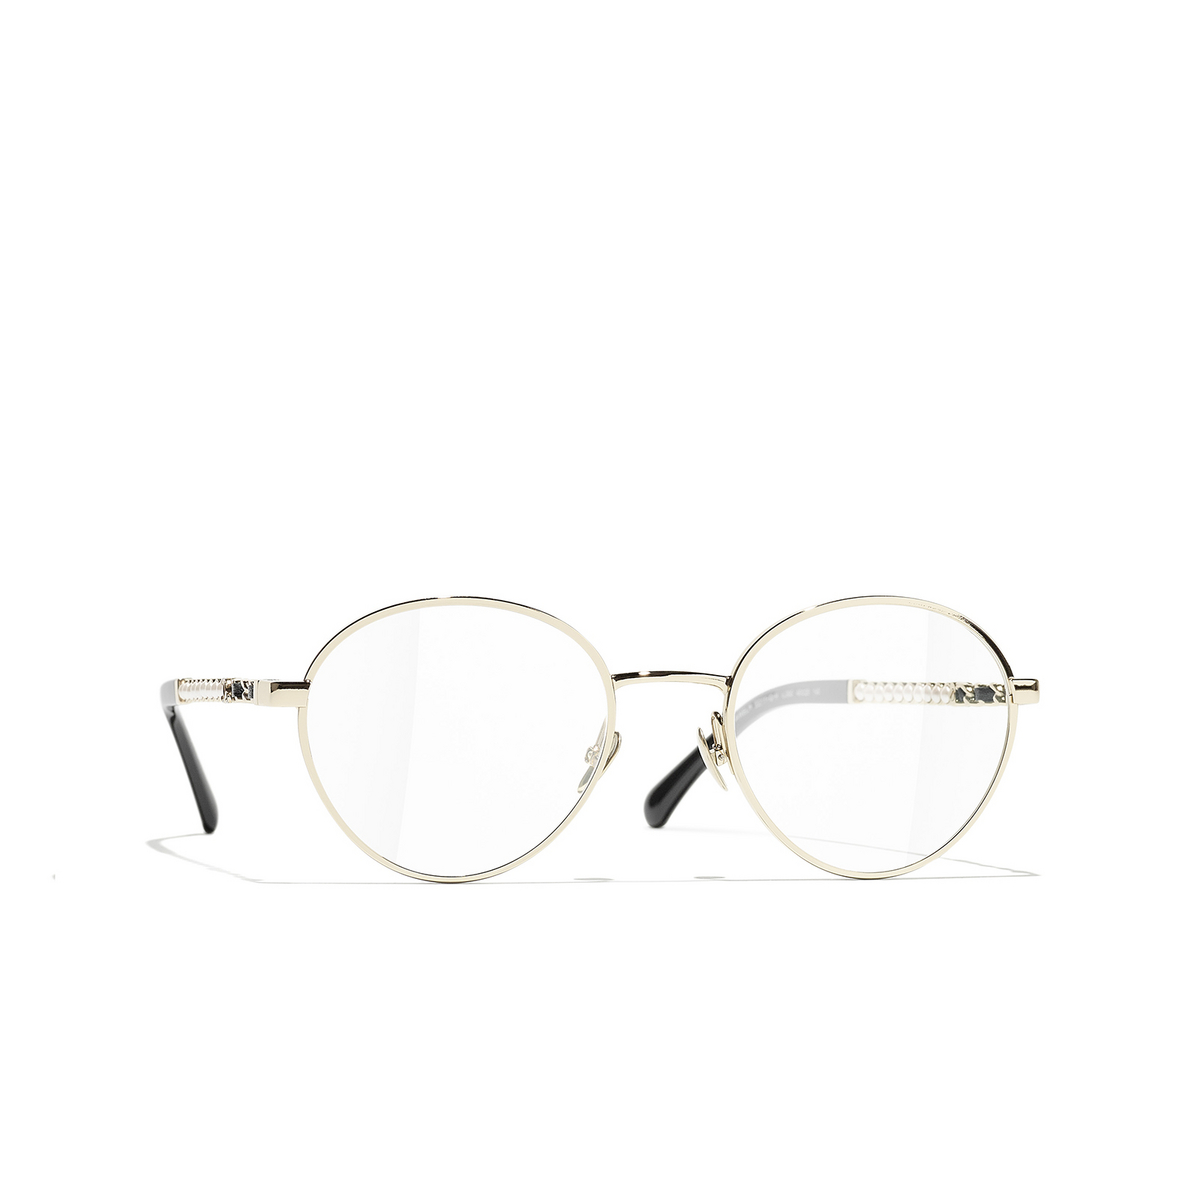 CHANEL round Eyeglasses C395 Gold & Black - three-quarters view